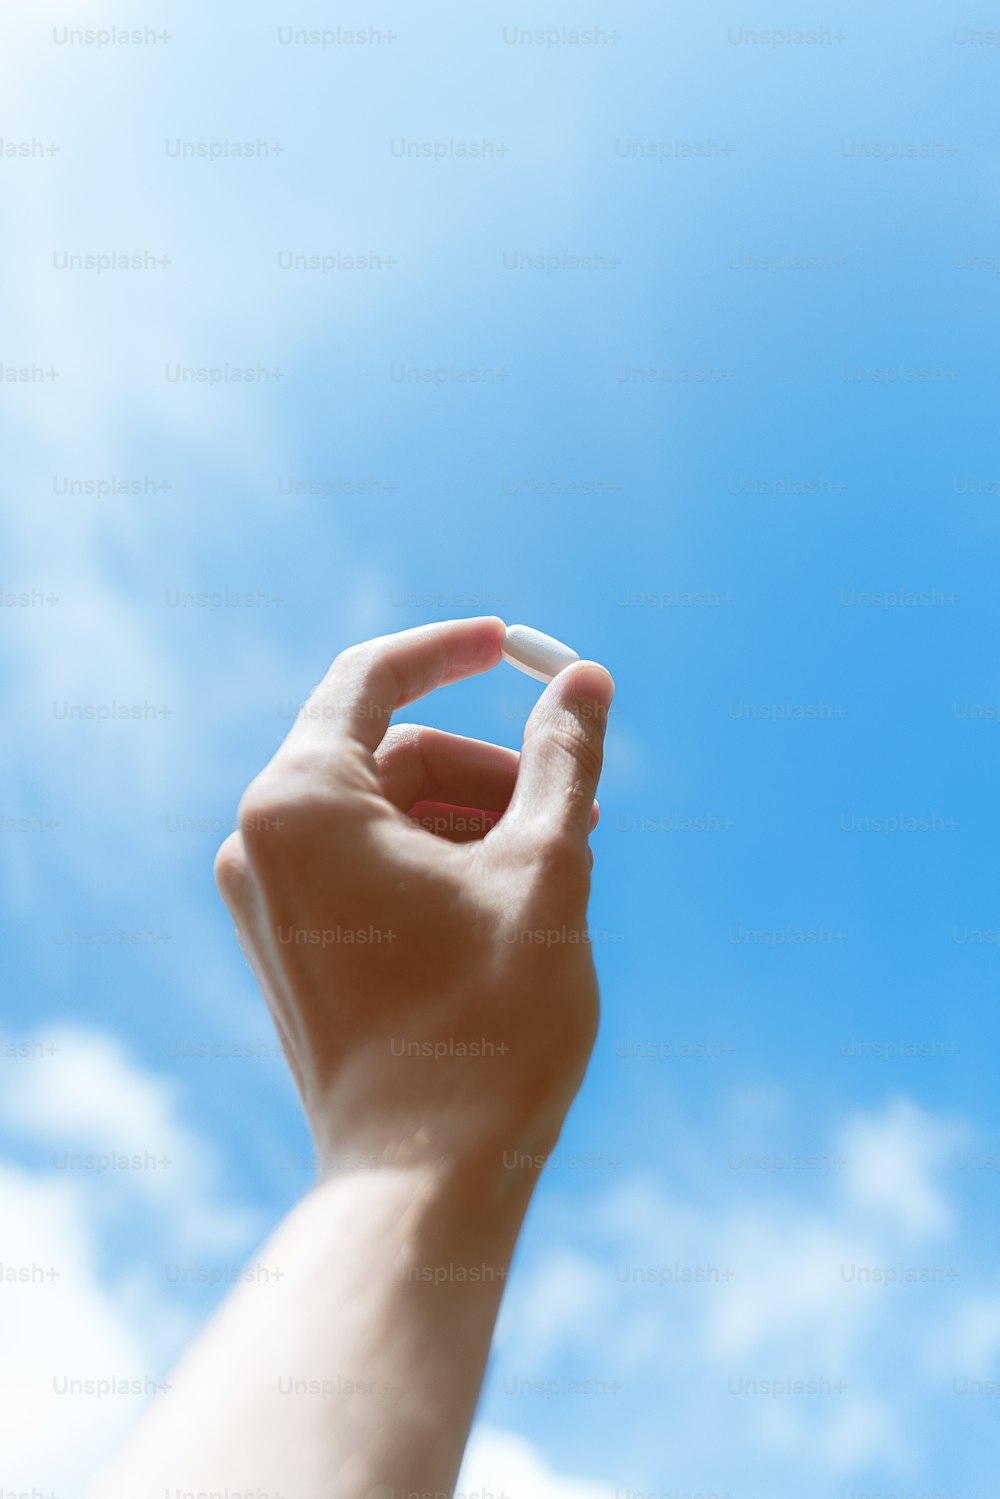 a hand reaching up into a blue sky